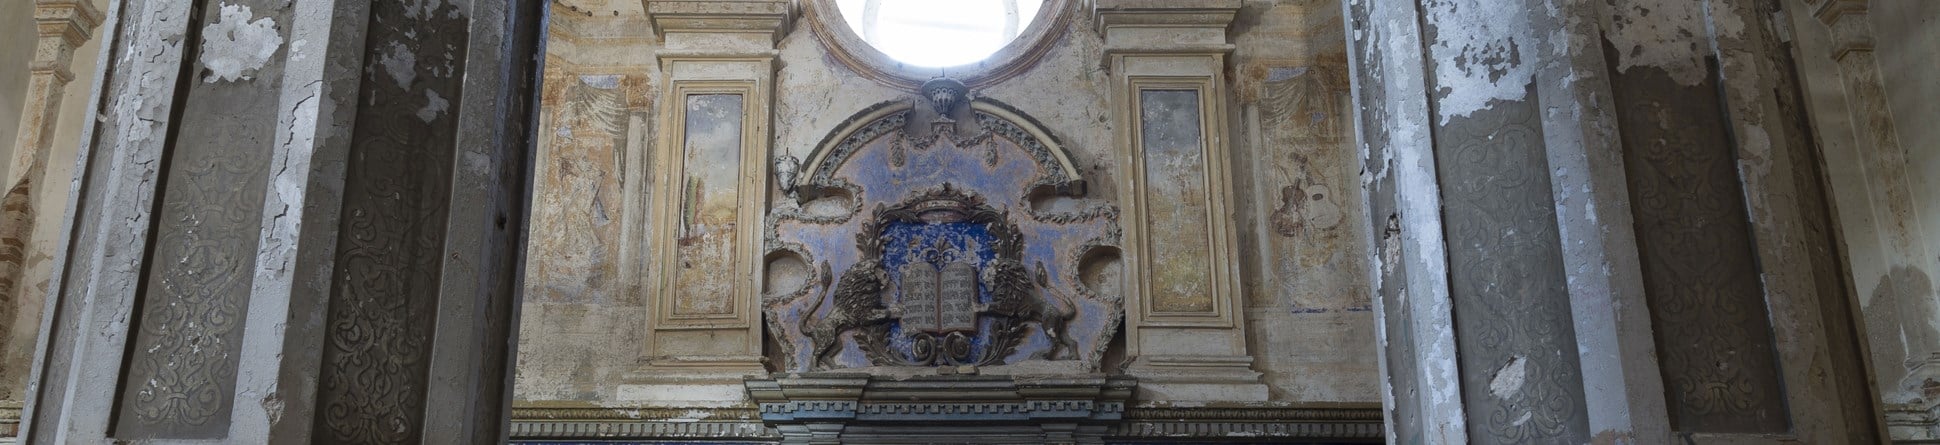 Decaying Baroque interior of Great Synagogue of Slonim, Belarus